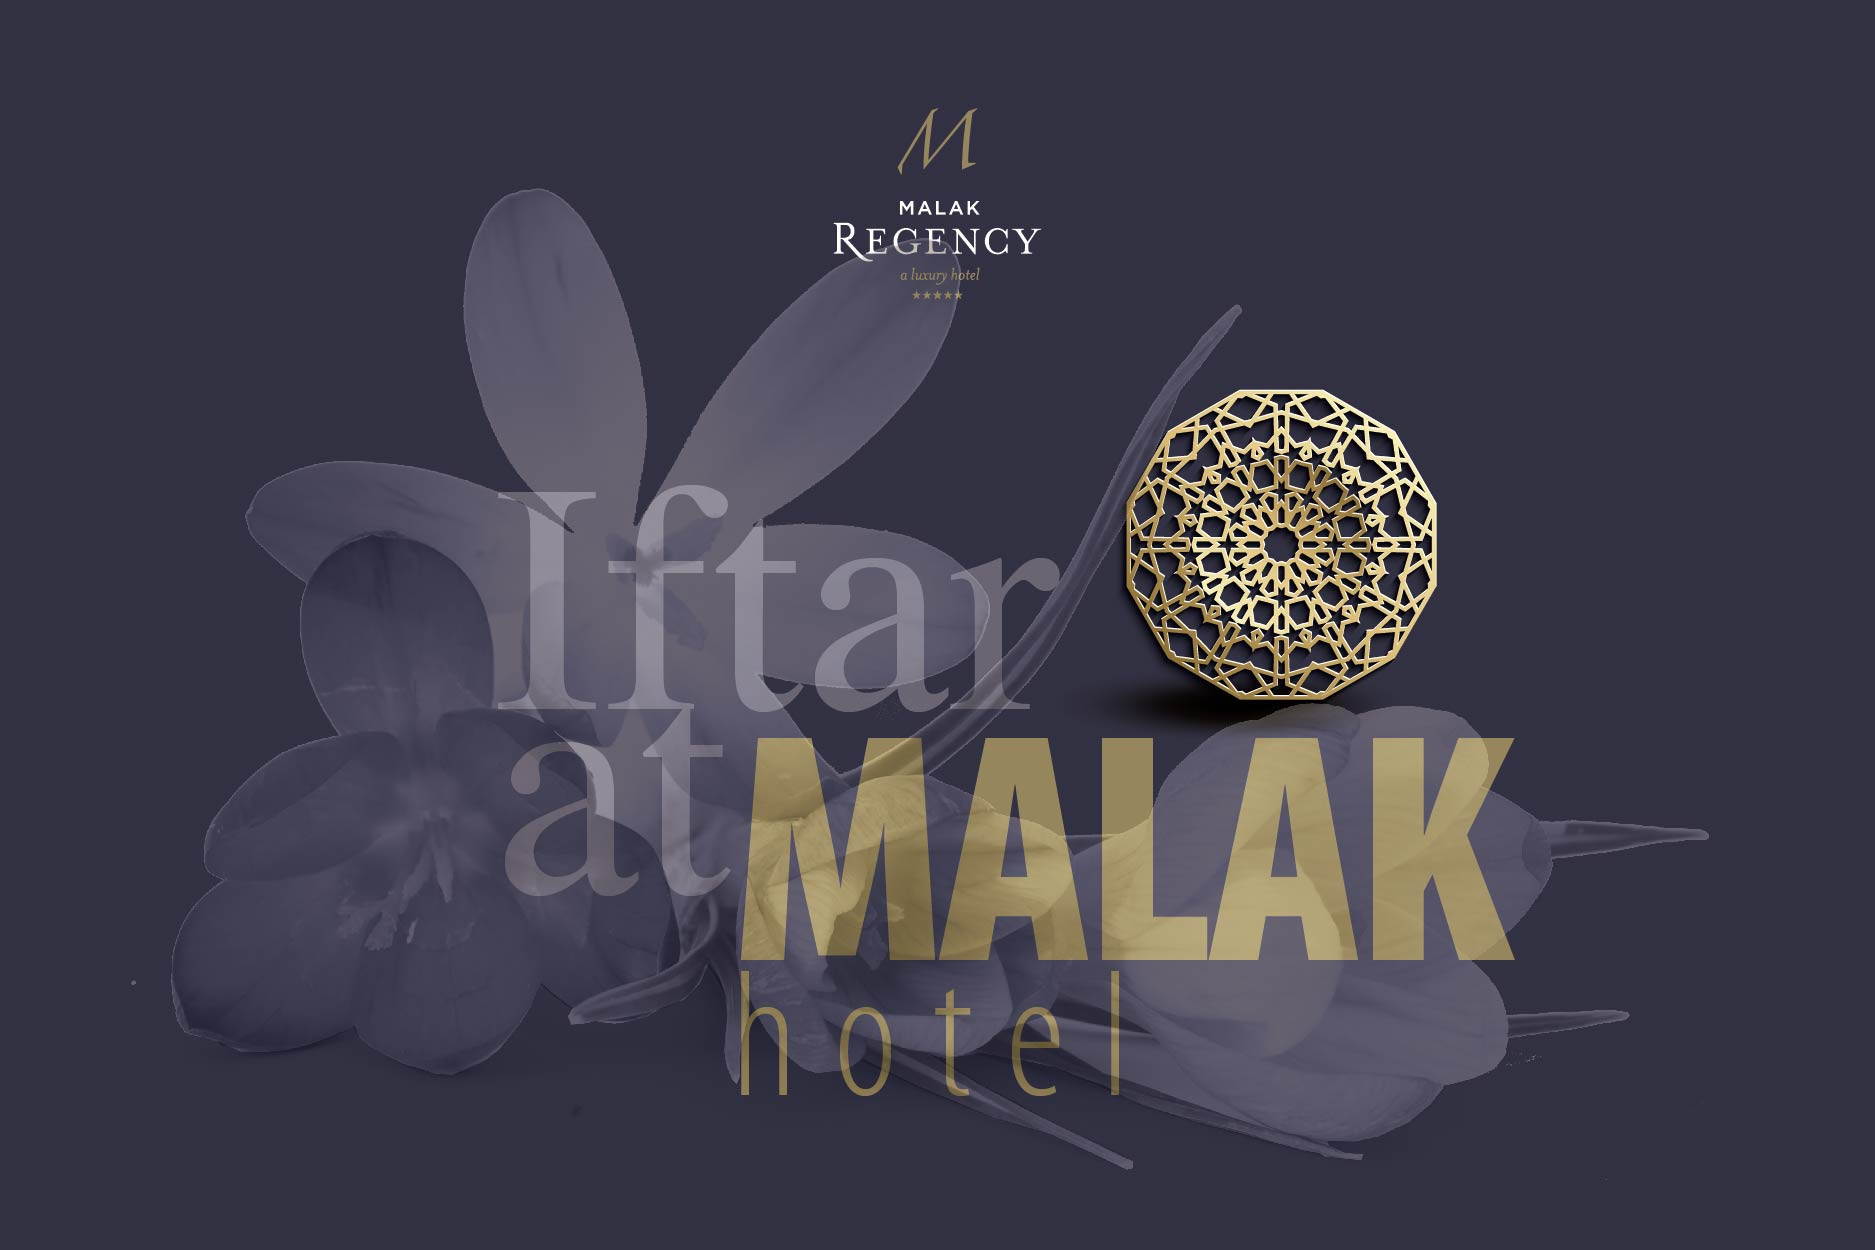 Iftar at Malak Regency Hotel